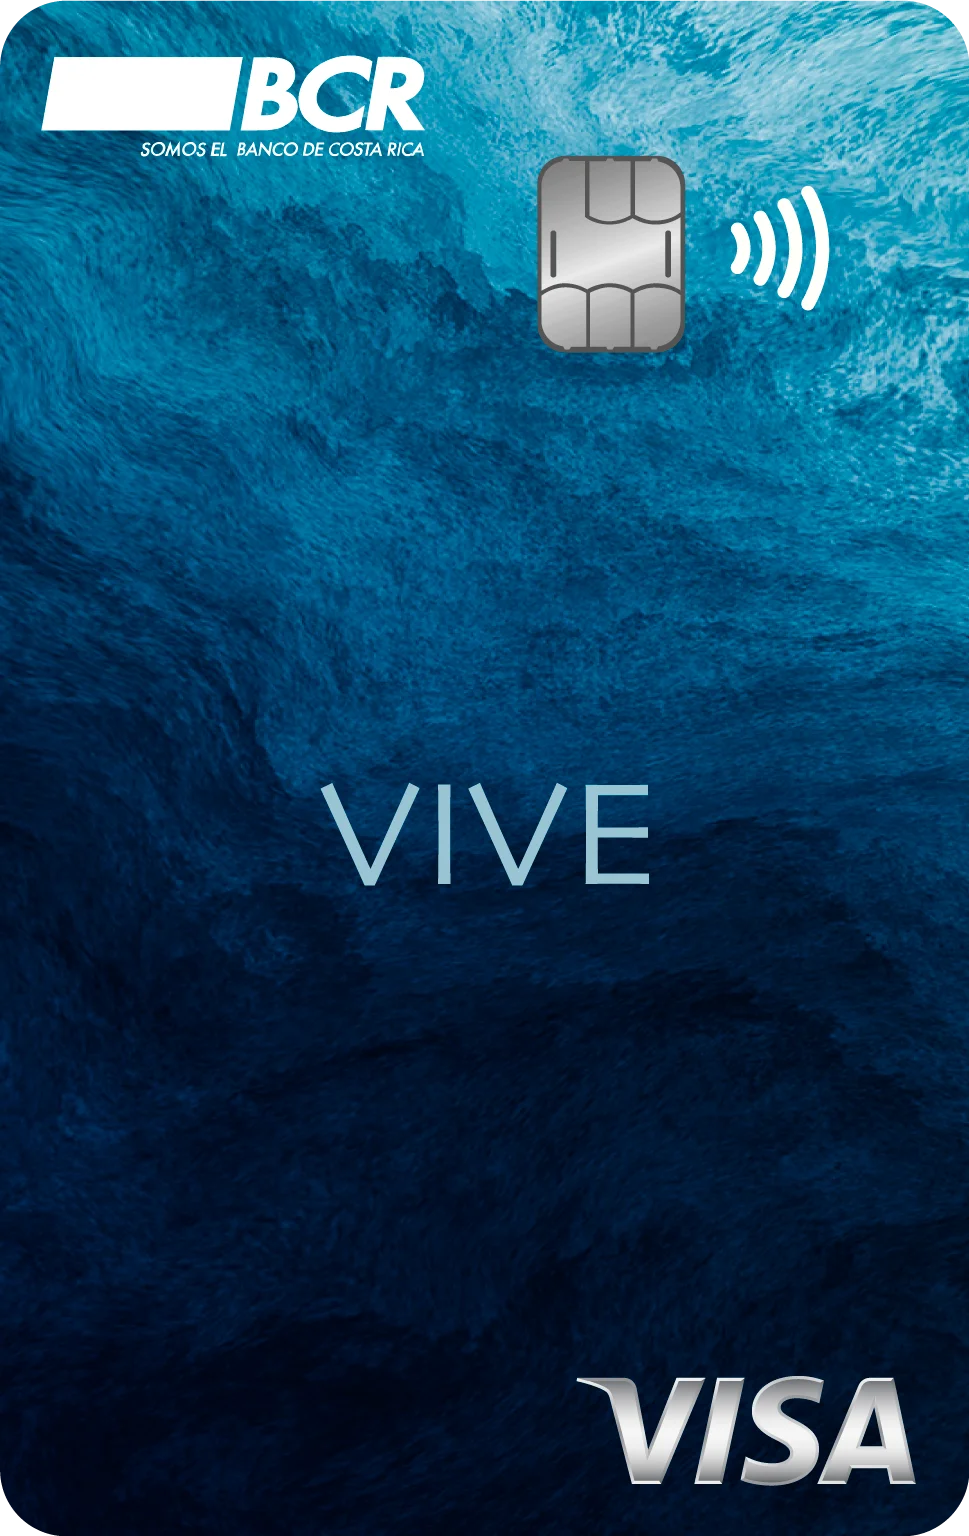 Imagen de la tarjeta de débito Visa Vive